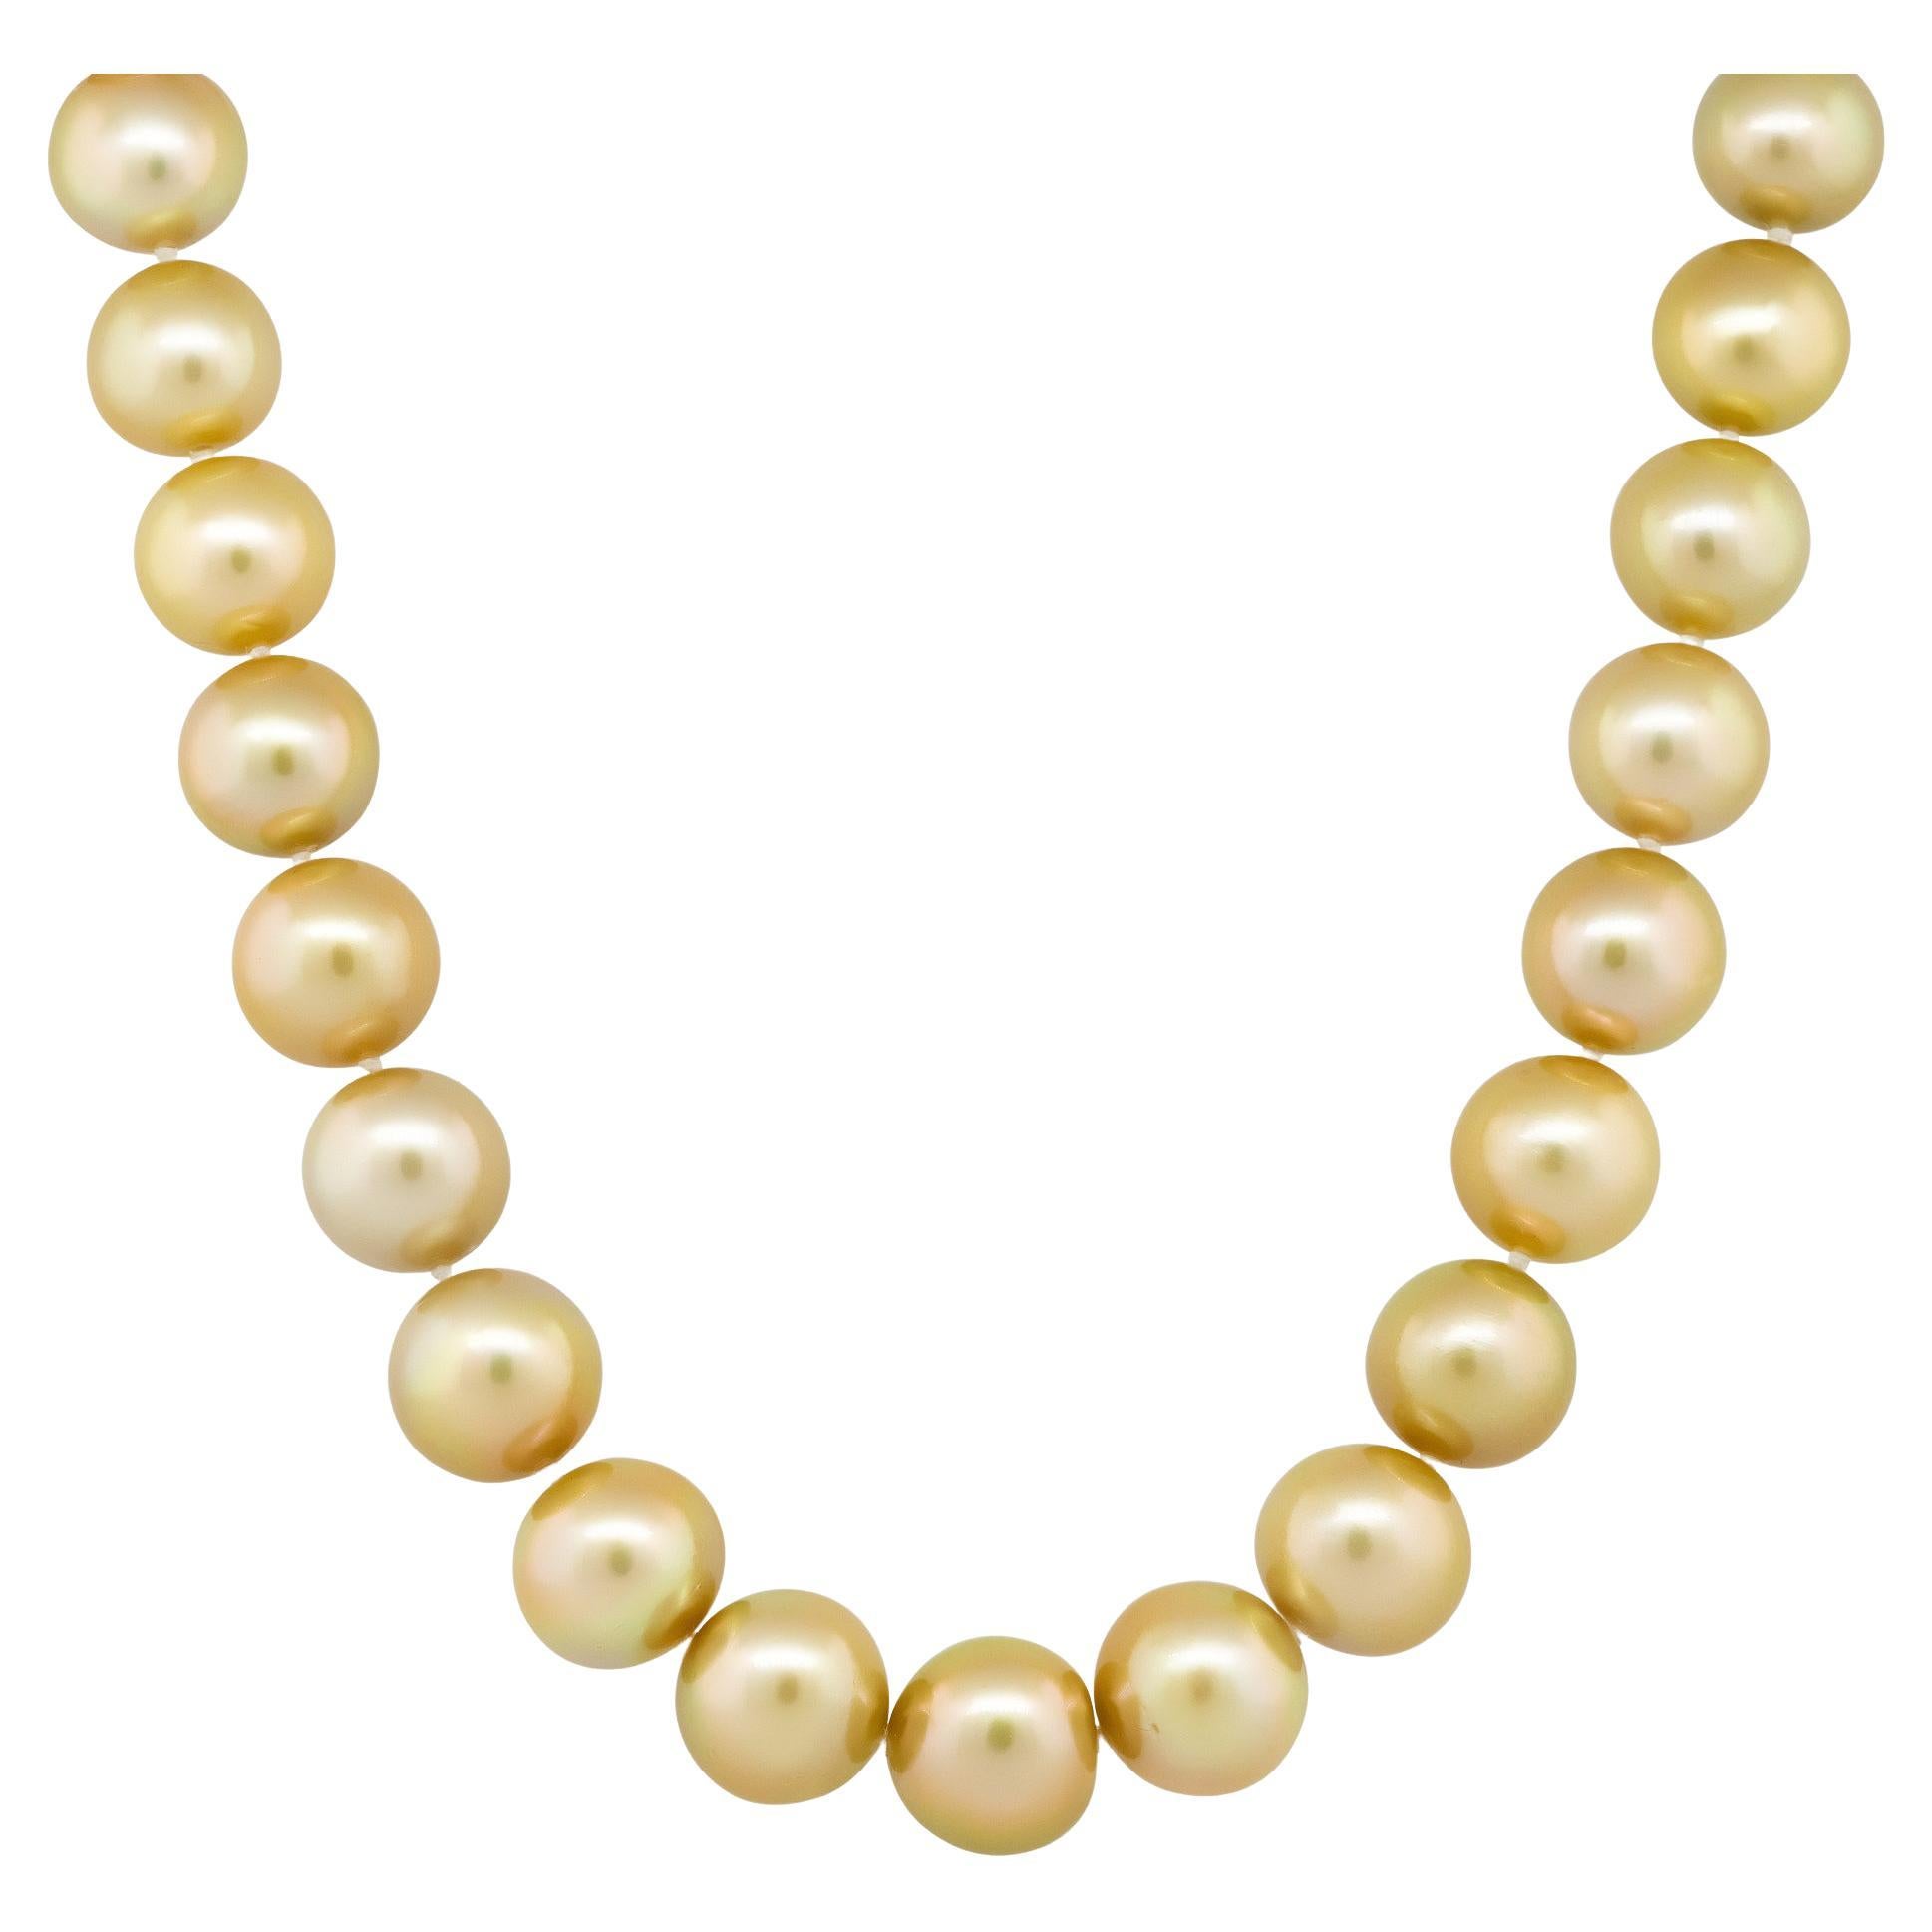 0.15 Carat Diamond South Sea Pearl Necklace 18 Karat in Stock For Sale